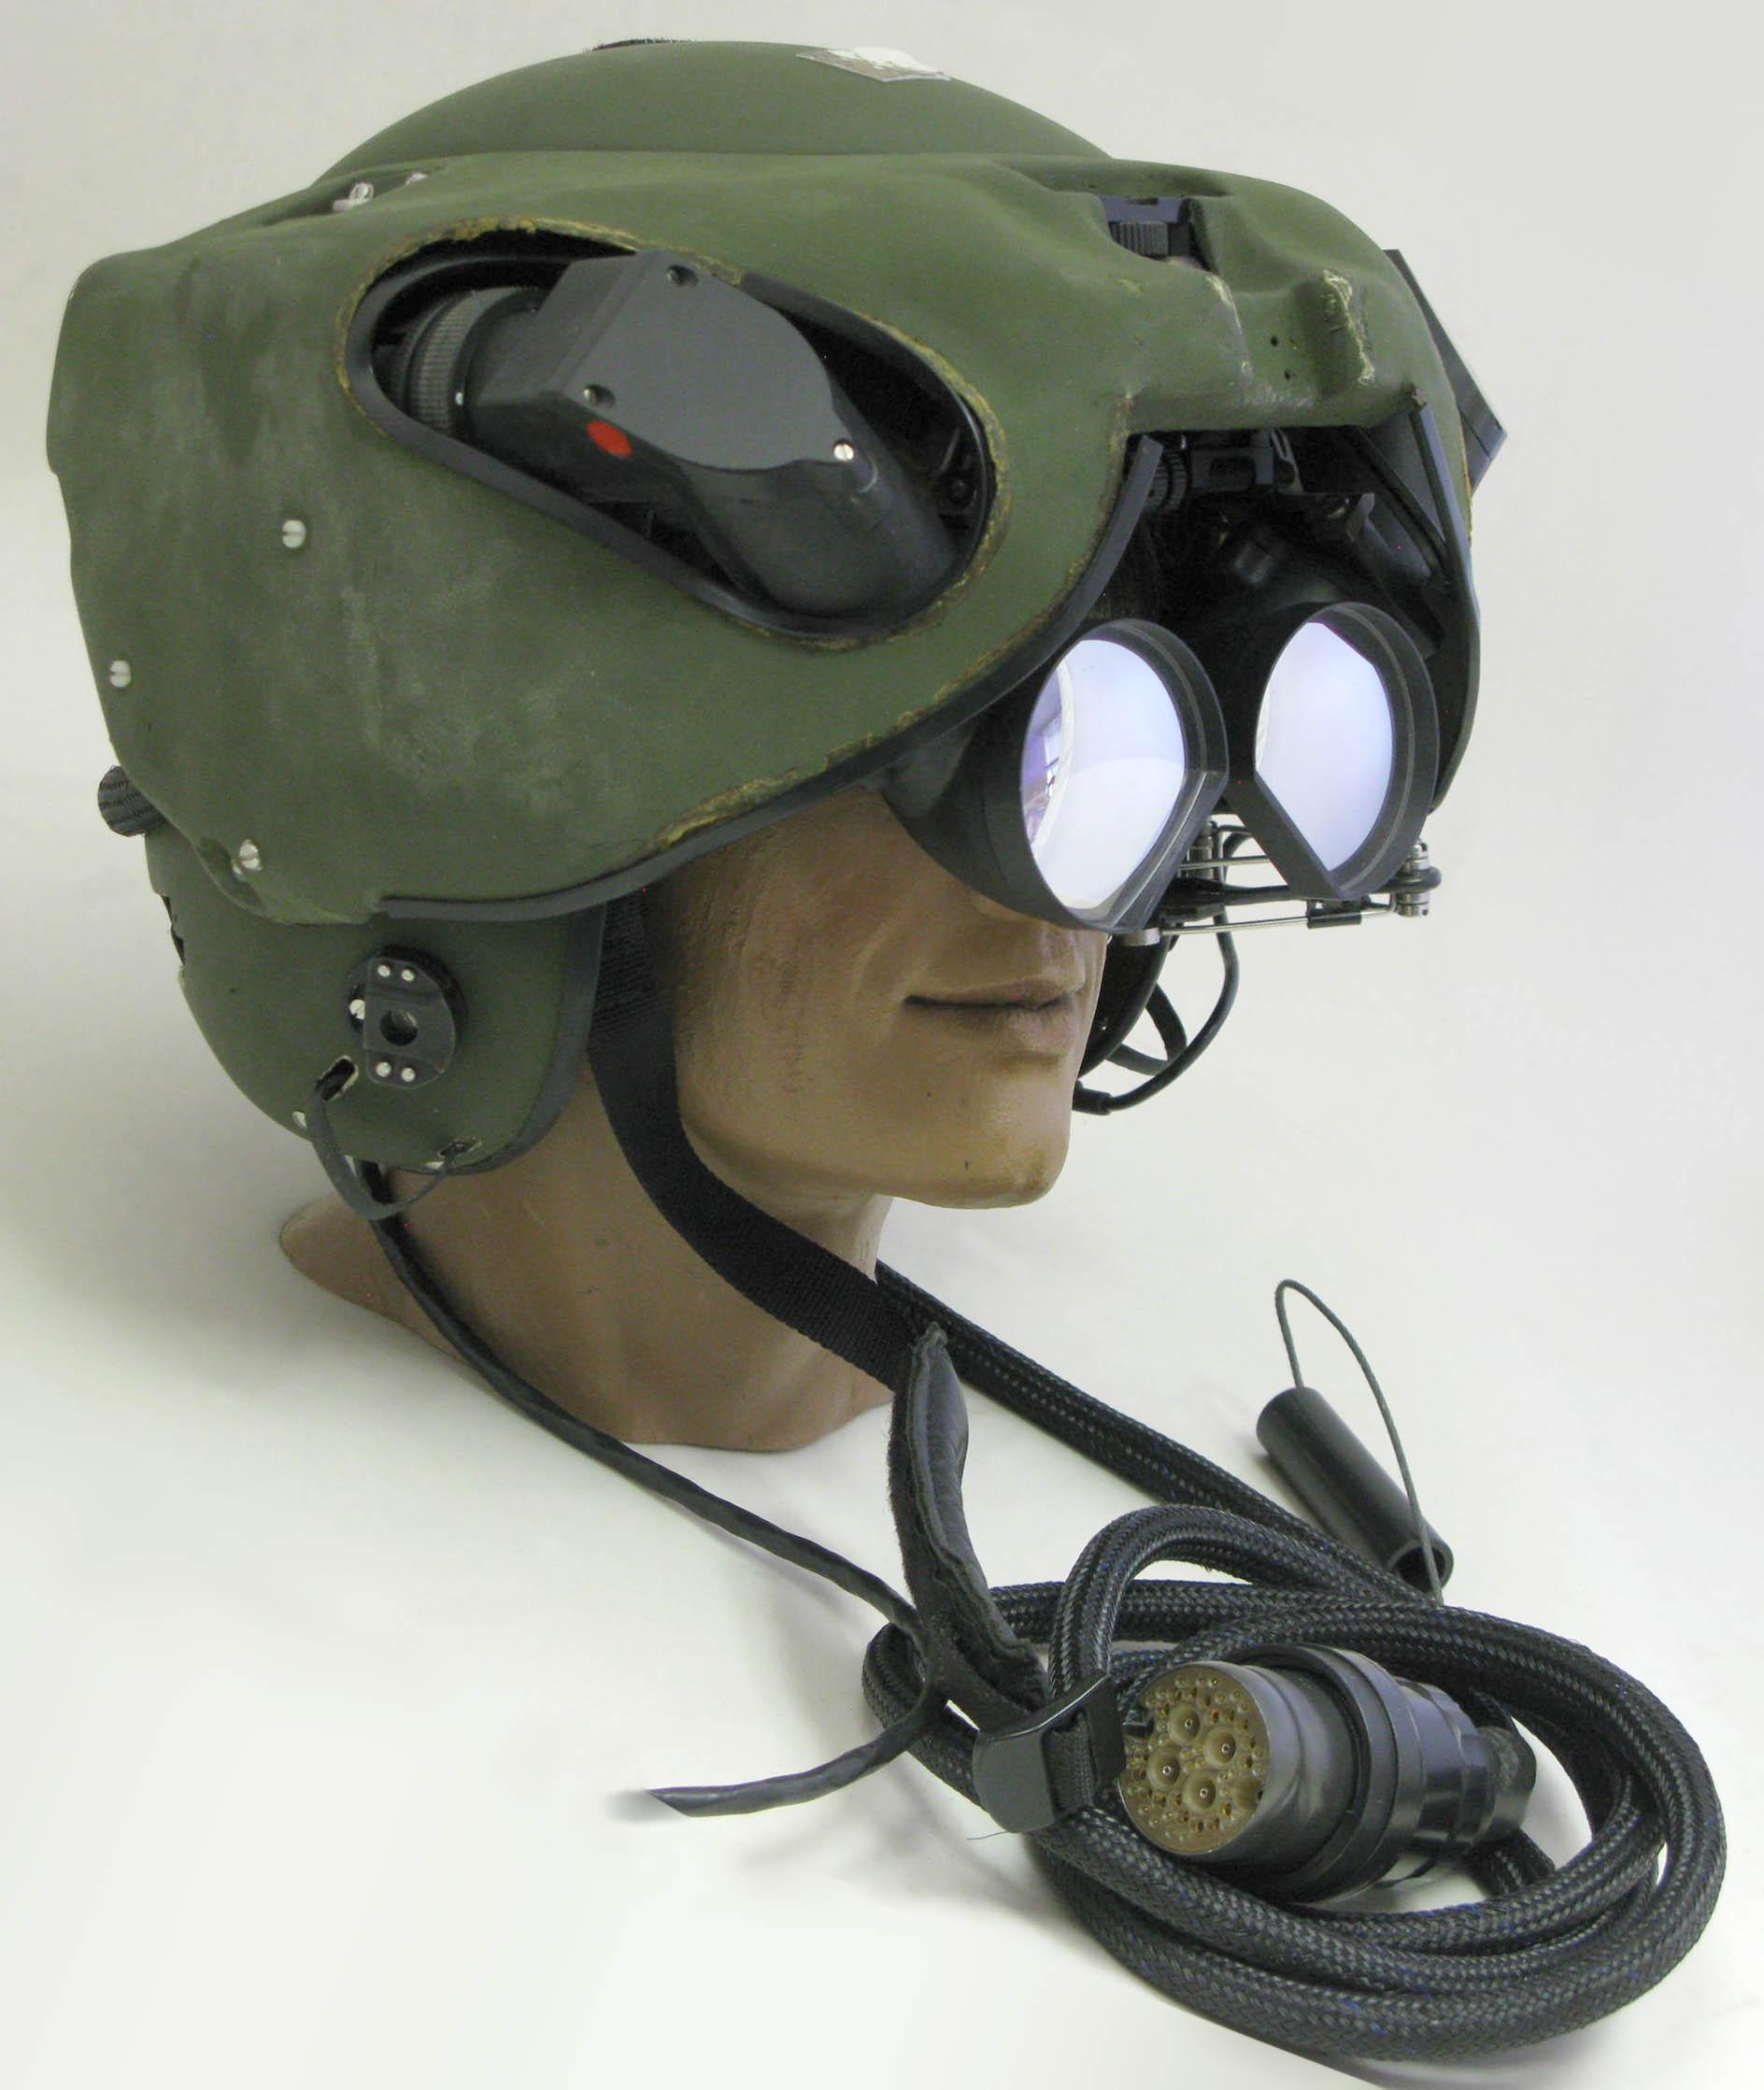 Helmet with Display